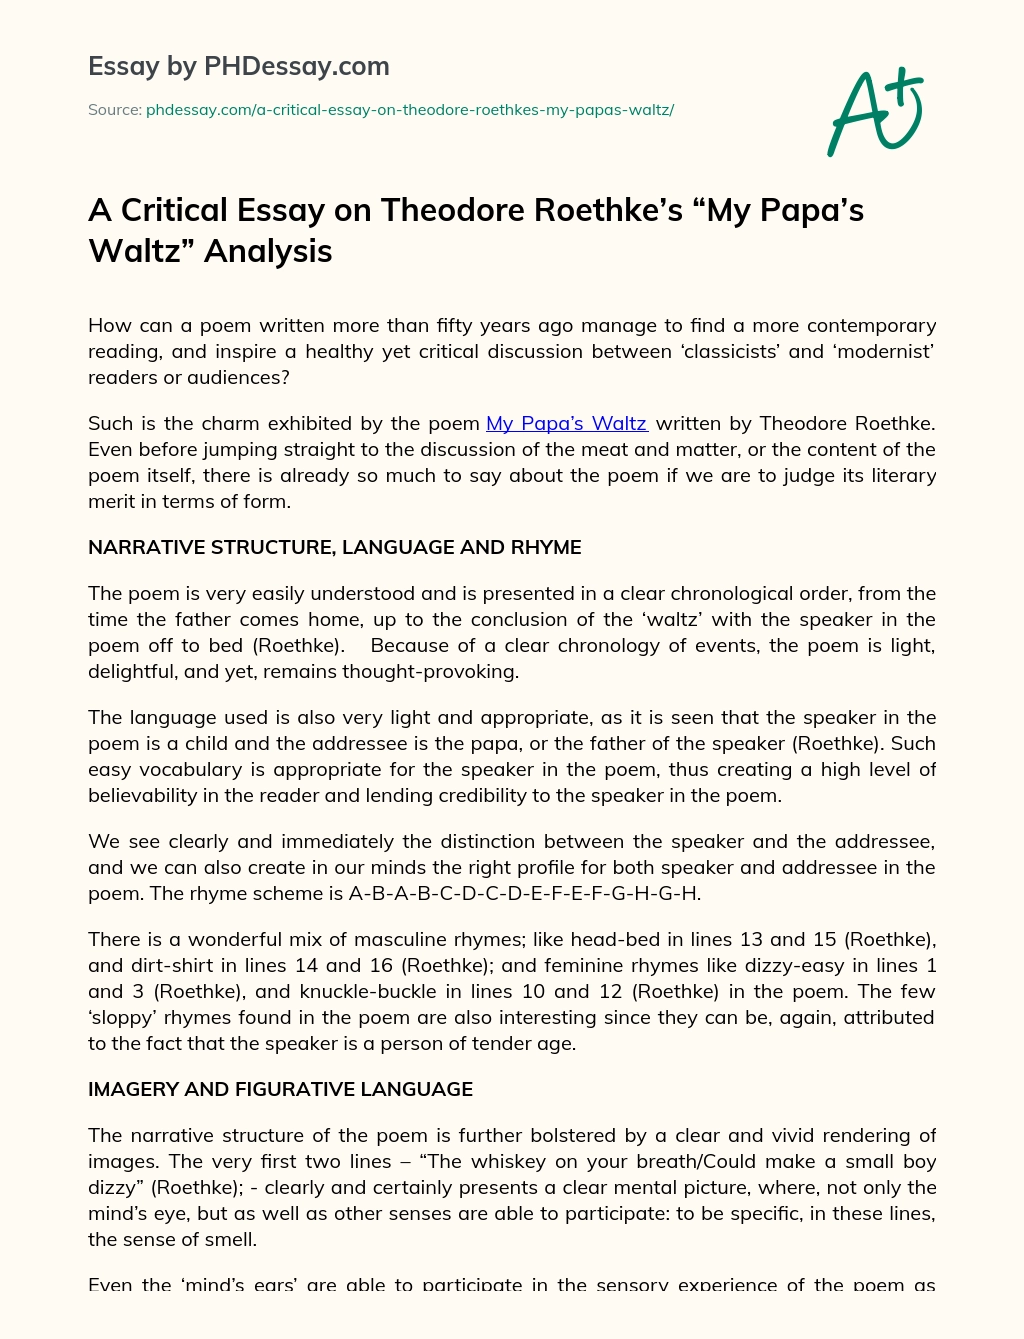 A Critical Essay on Theodore Roethke’s “My Papa’s Waltz” Analysis essay